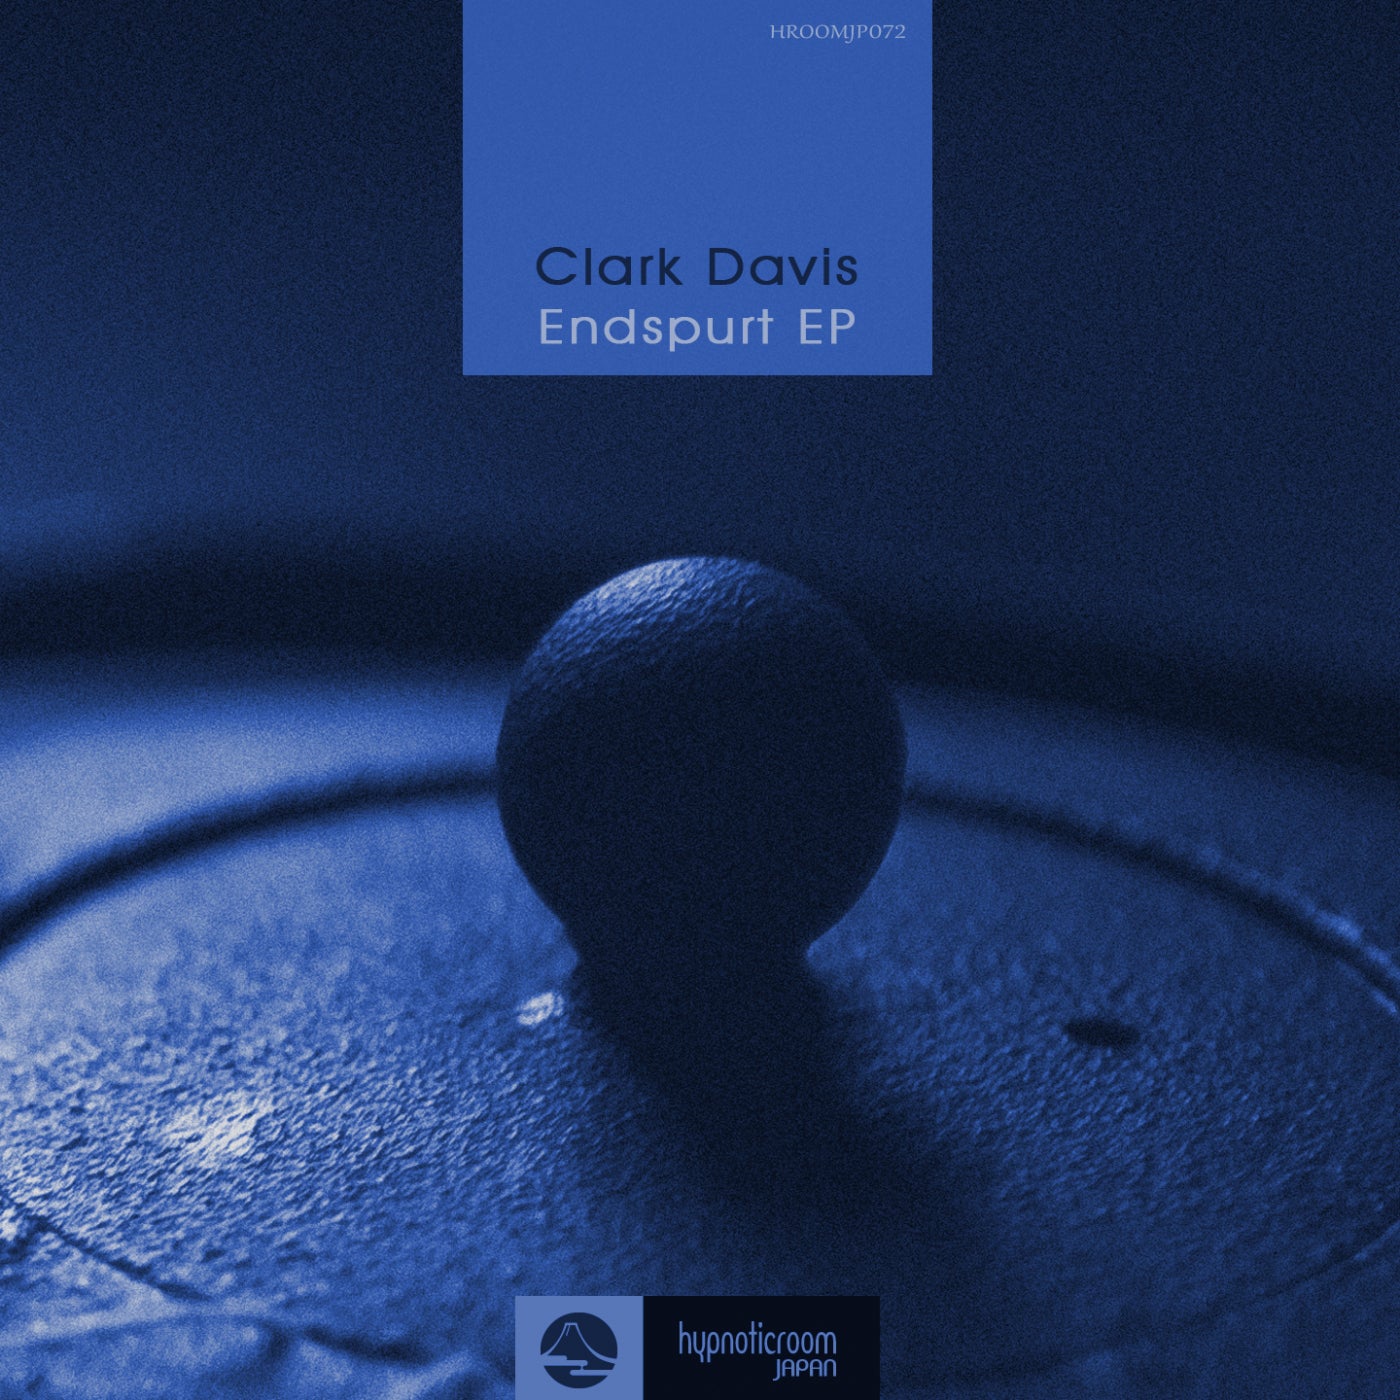 image cover: Clark Davis - Endspurt EP / HROOMJP072